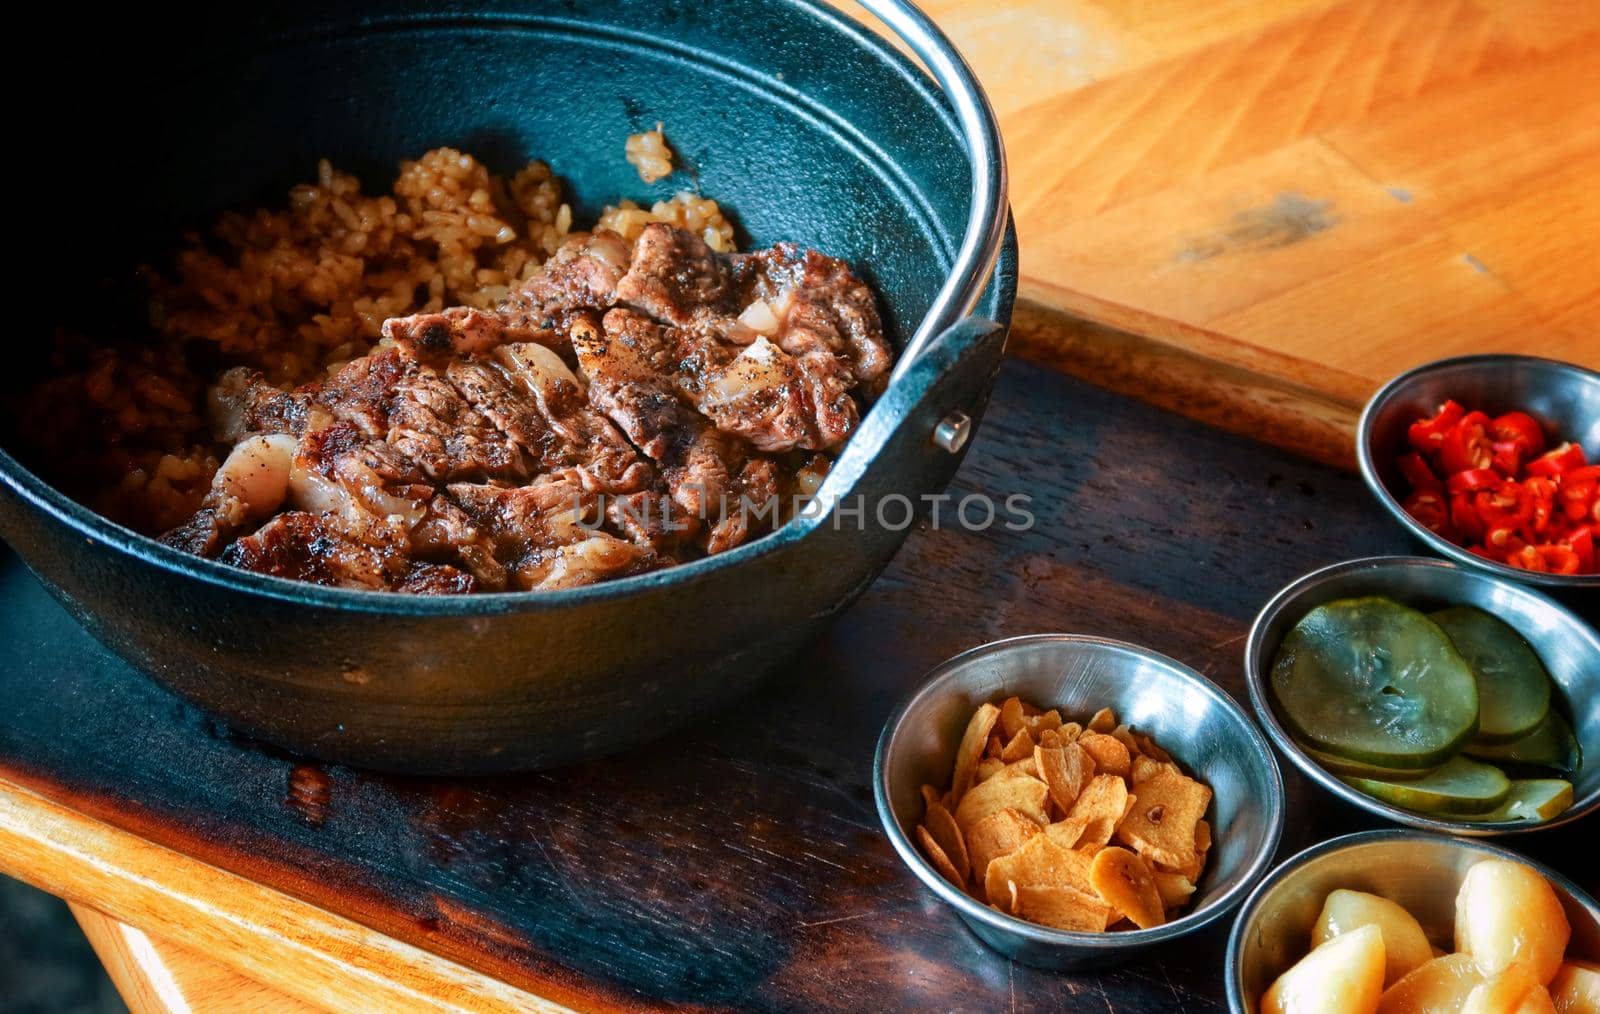 set of beef steak with stir fried rice by baworn47